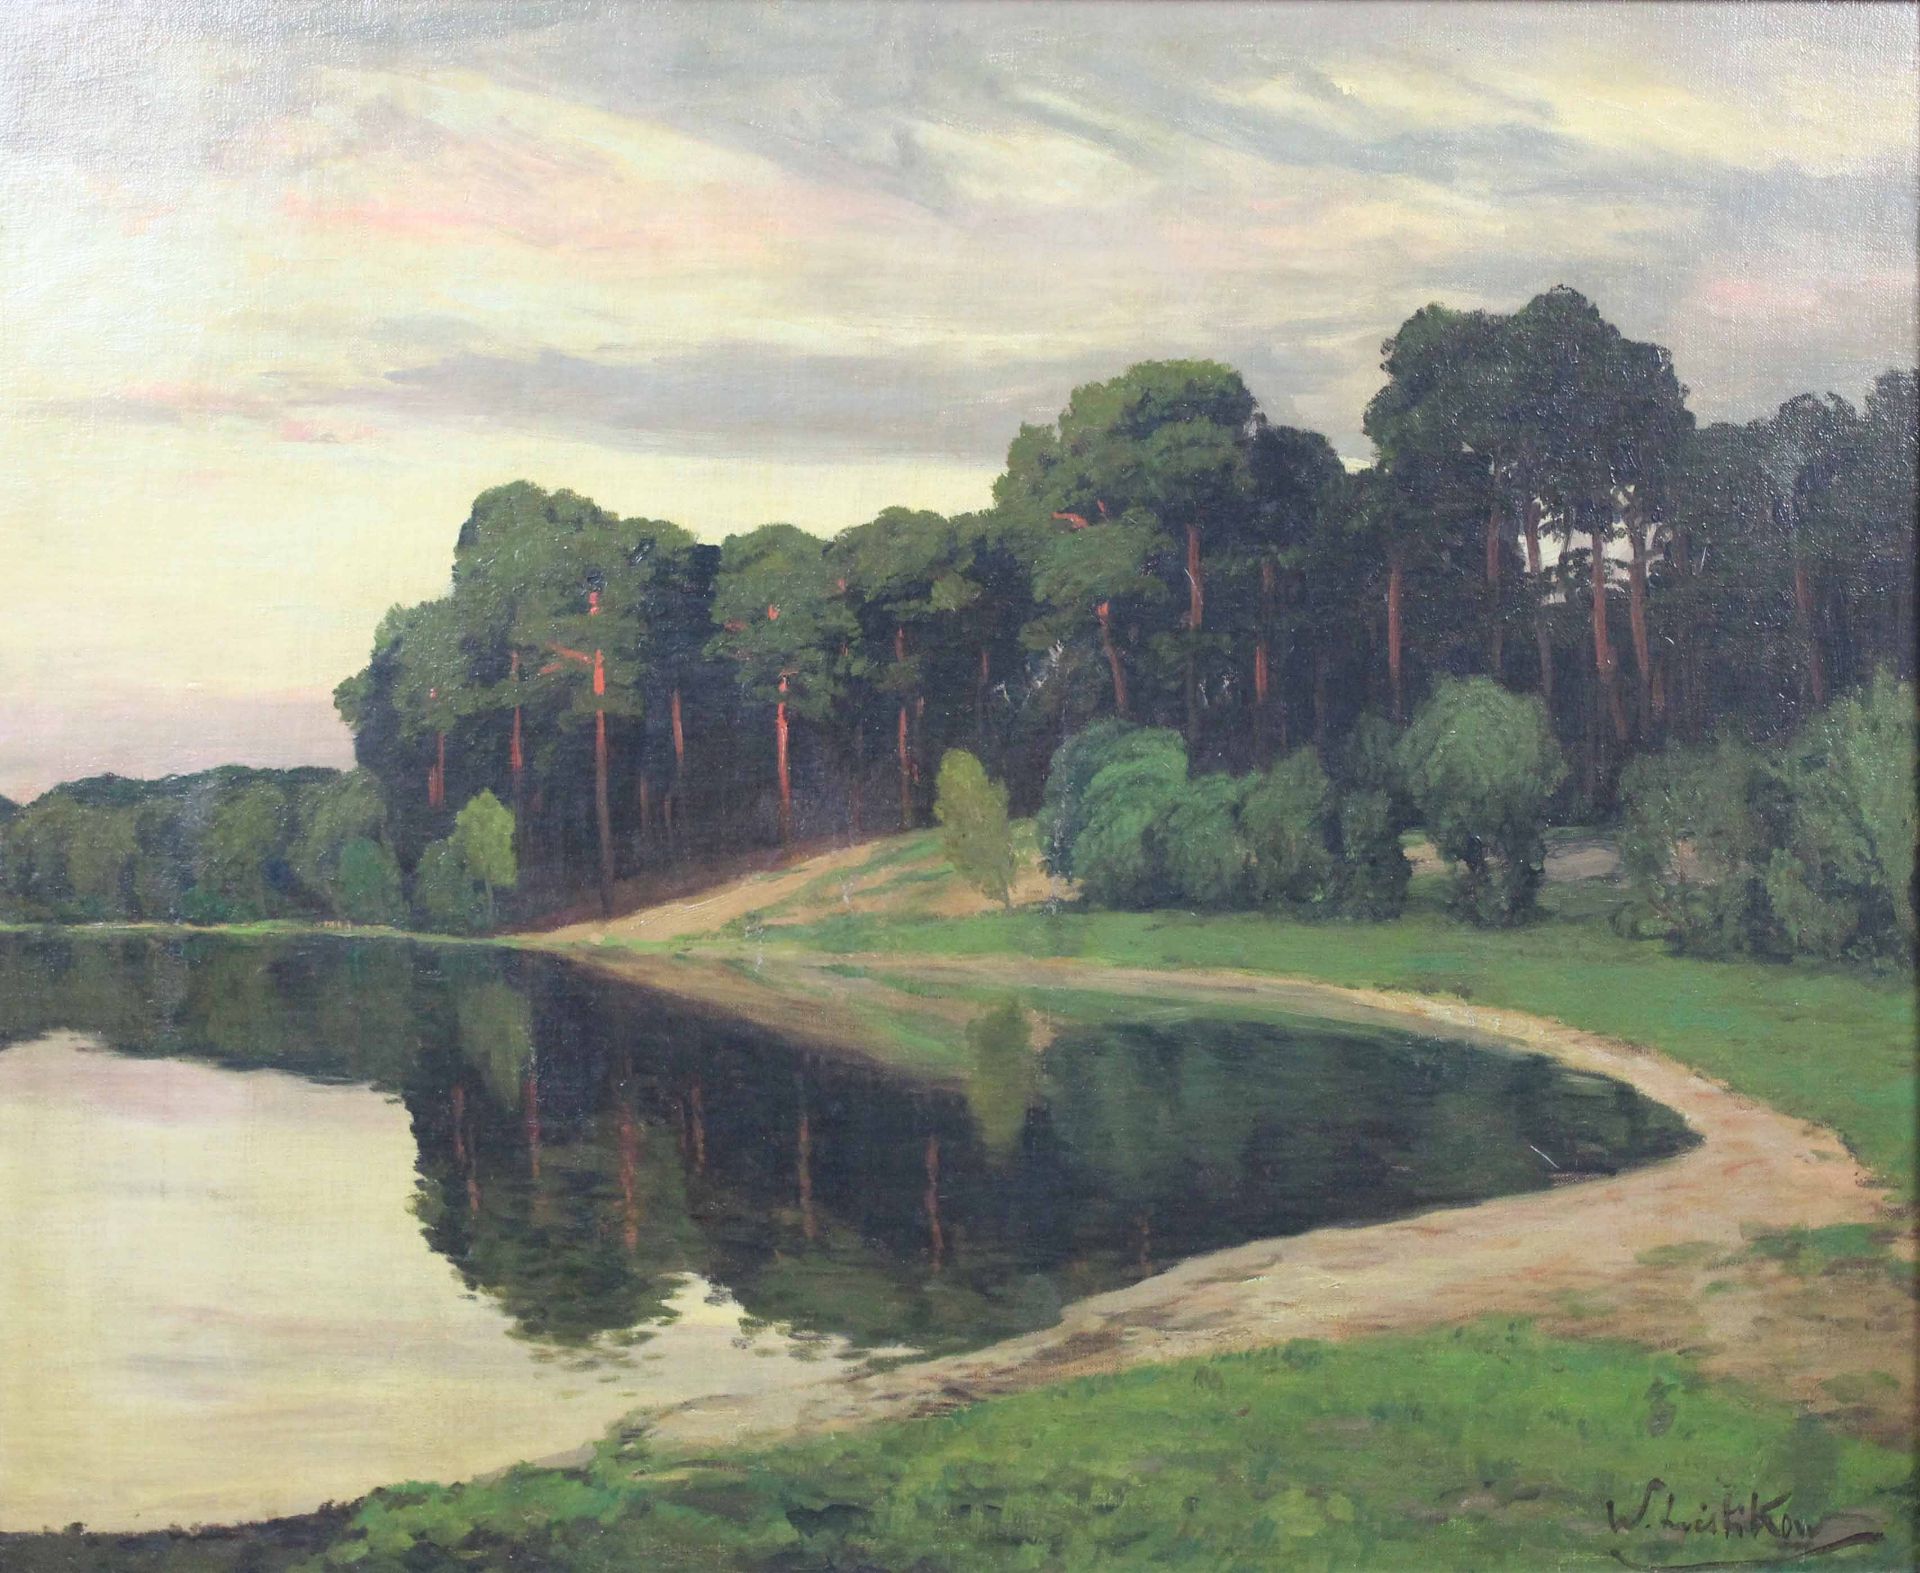 Walter LEISTIKOW (1865 - 1908). "Grunewaldsee"